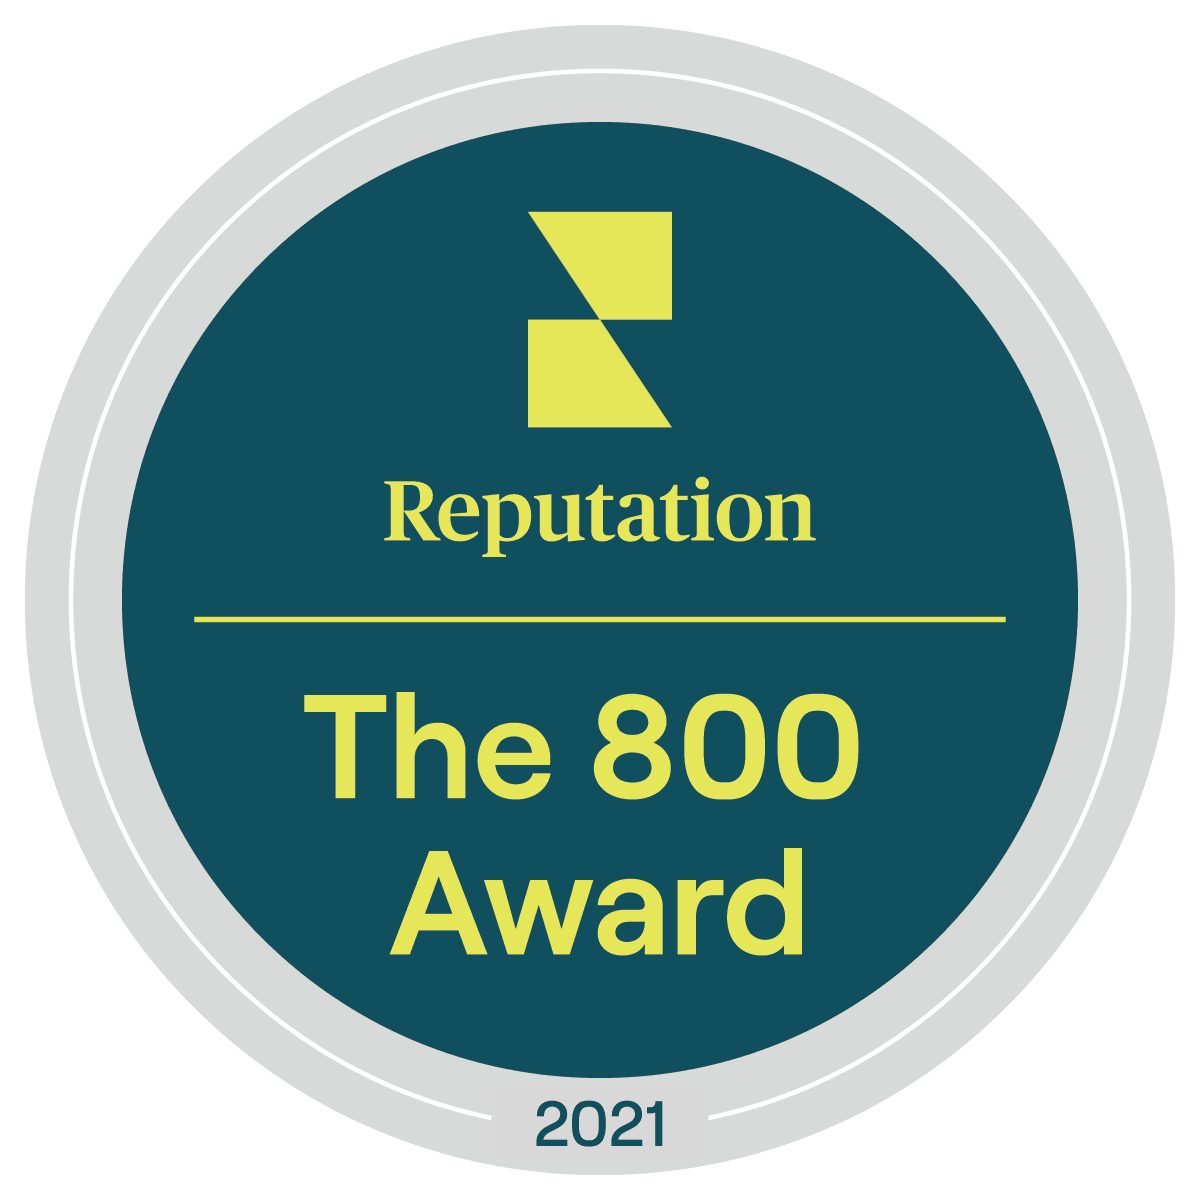 Reputation: The 800 Award. 2021.